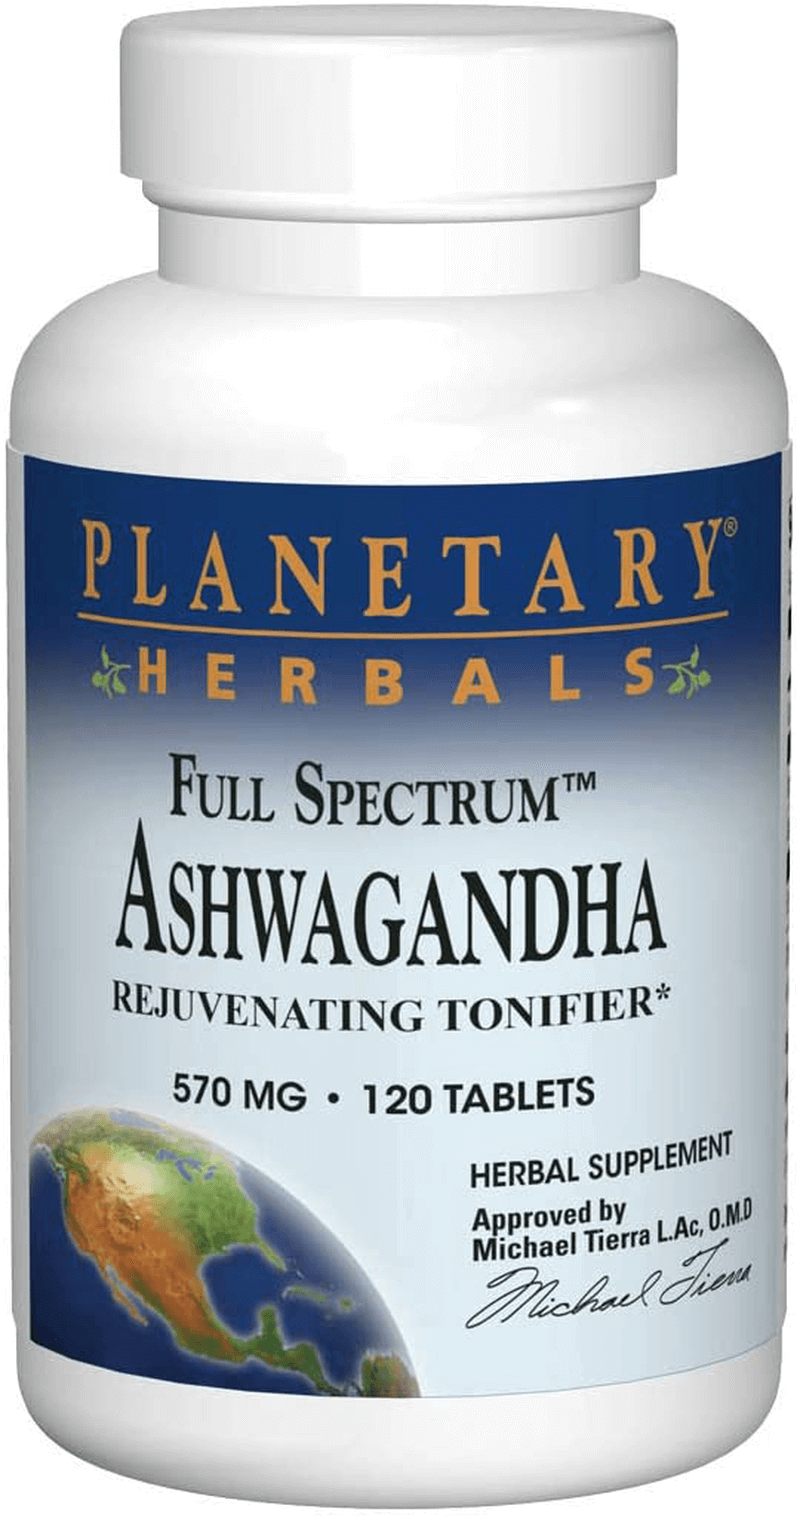 Planetary Herbals Ashwagandha Full Spectrum 570 mg, Rejuvenating Tonifier,120 Tablets - vitamenstore.com